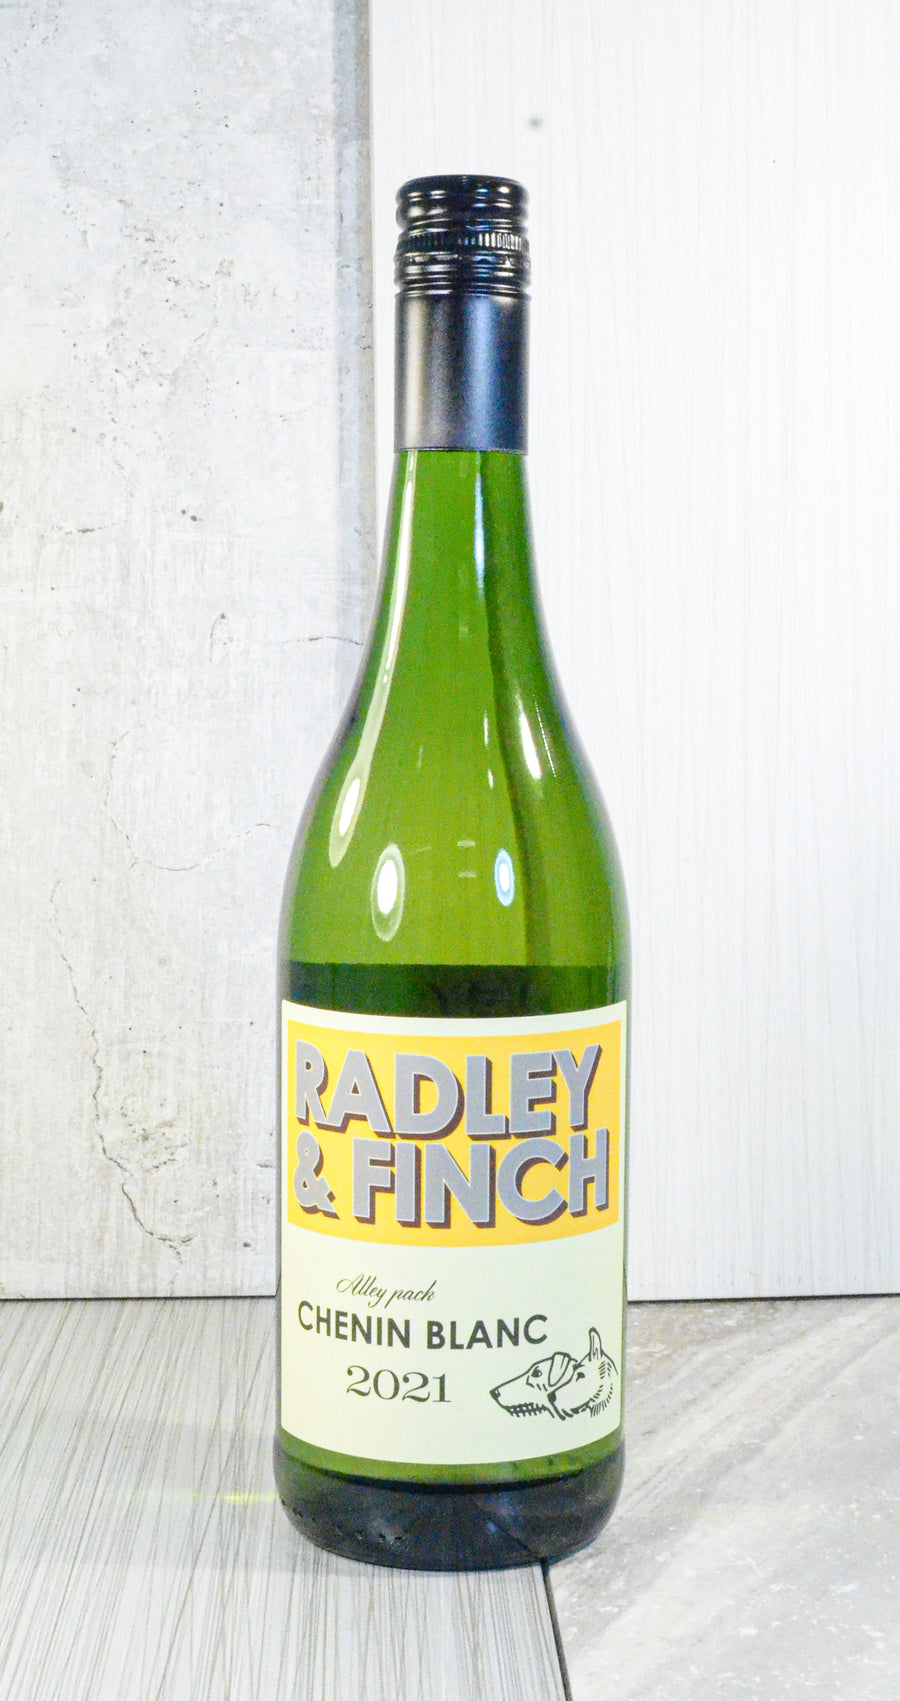 Radley & Finch, Chenin Blanc 2021